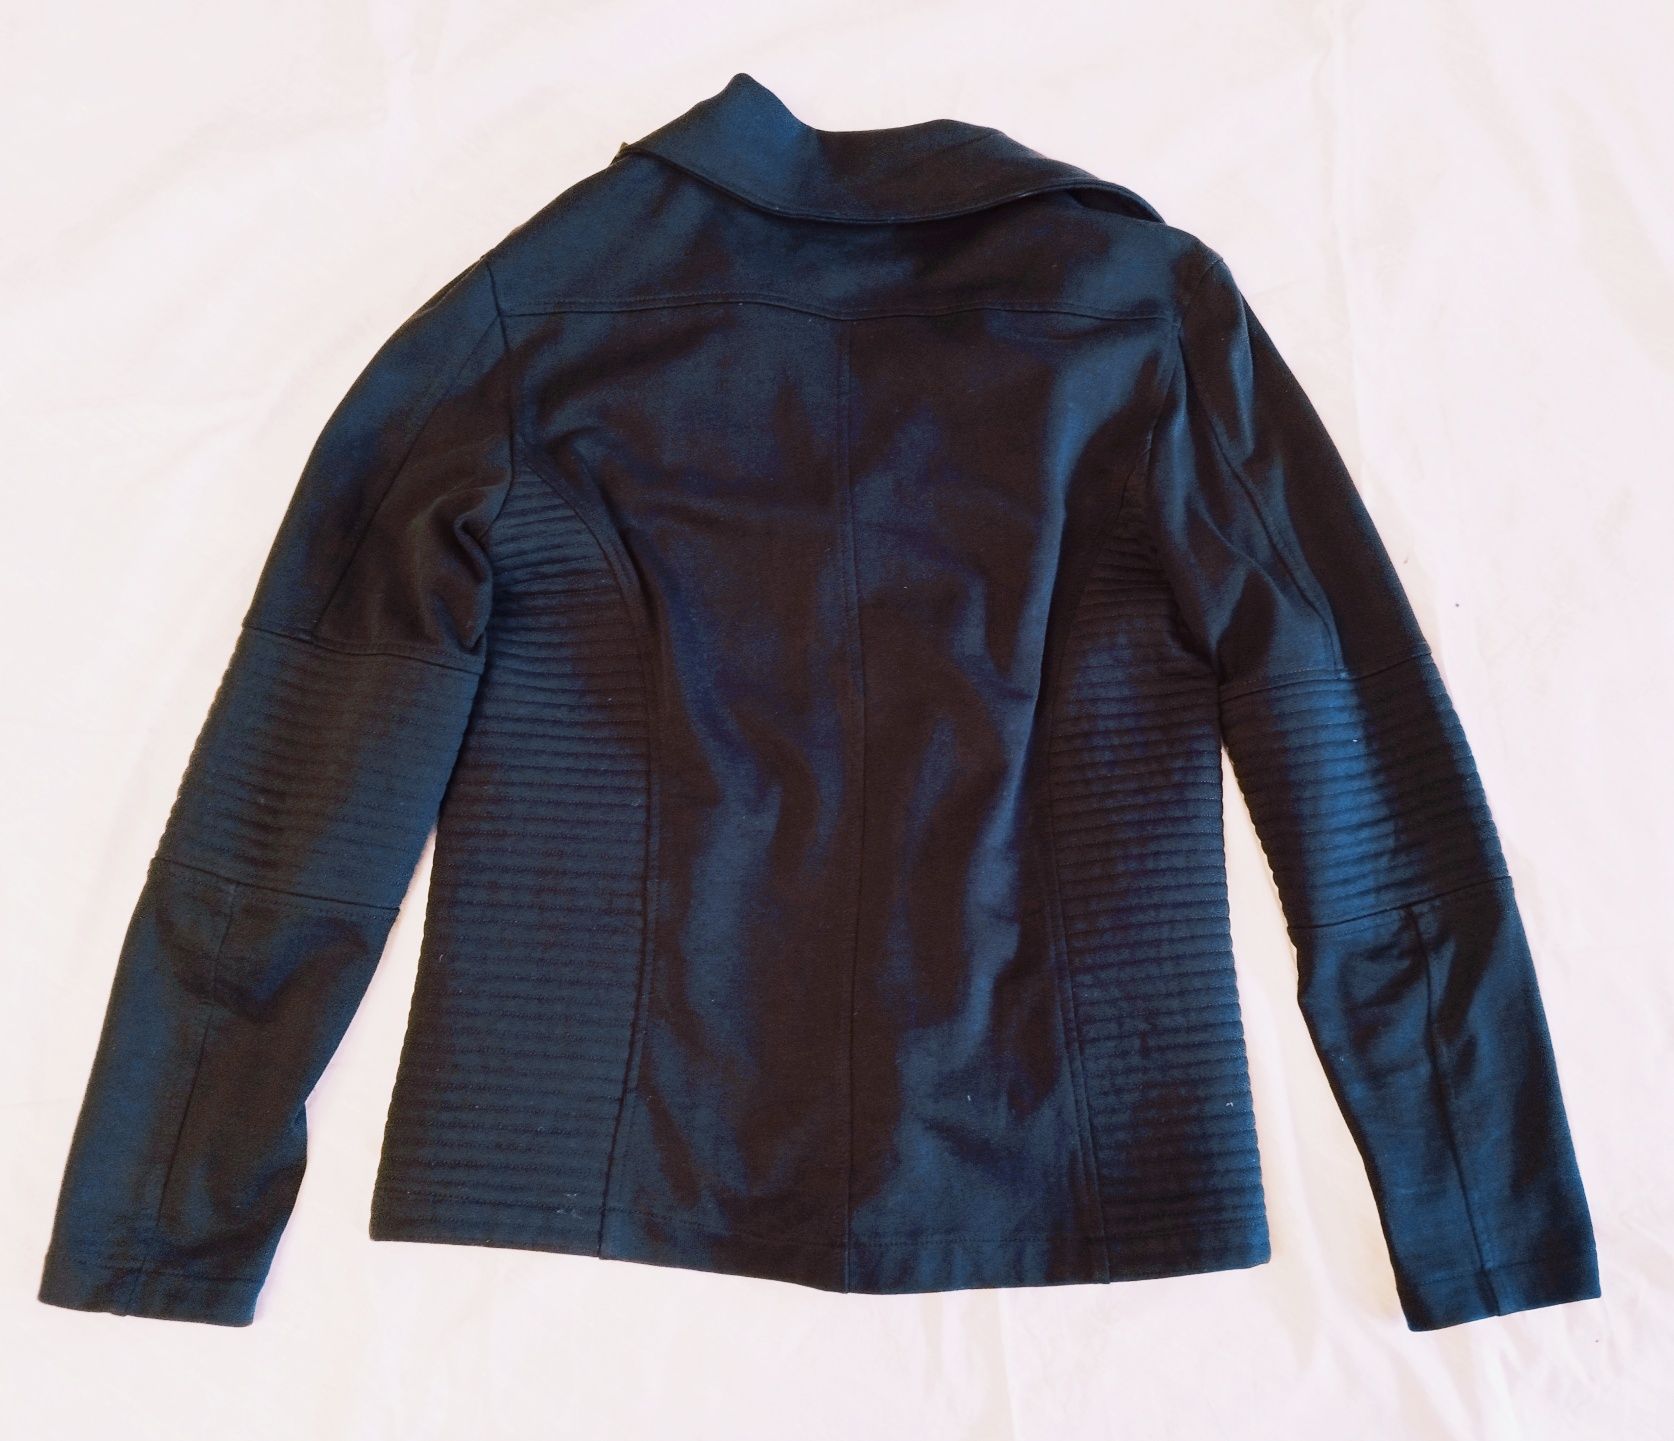 Jacheta bluza cardigan pentru bărbați Zara Man, mărimea M.

Detalii:
B